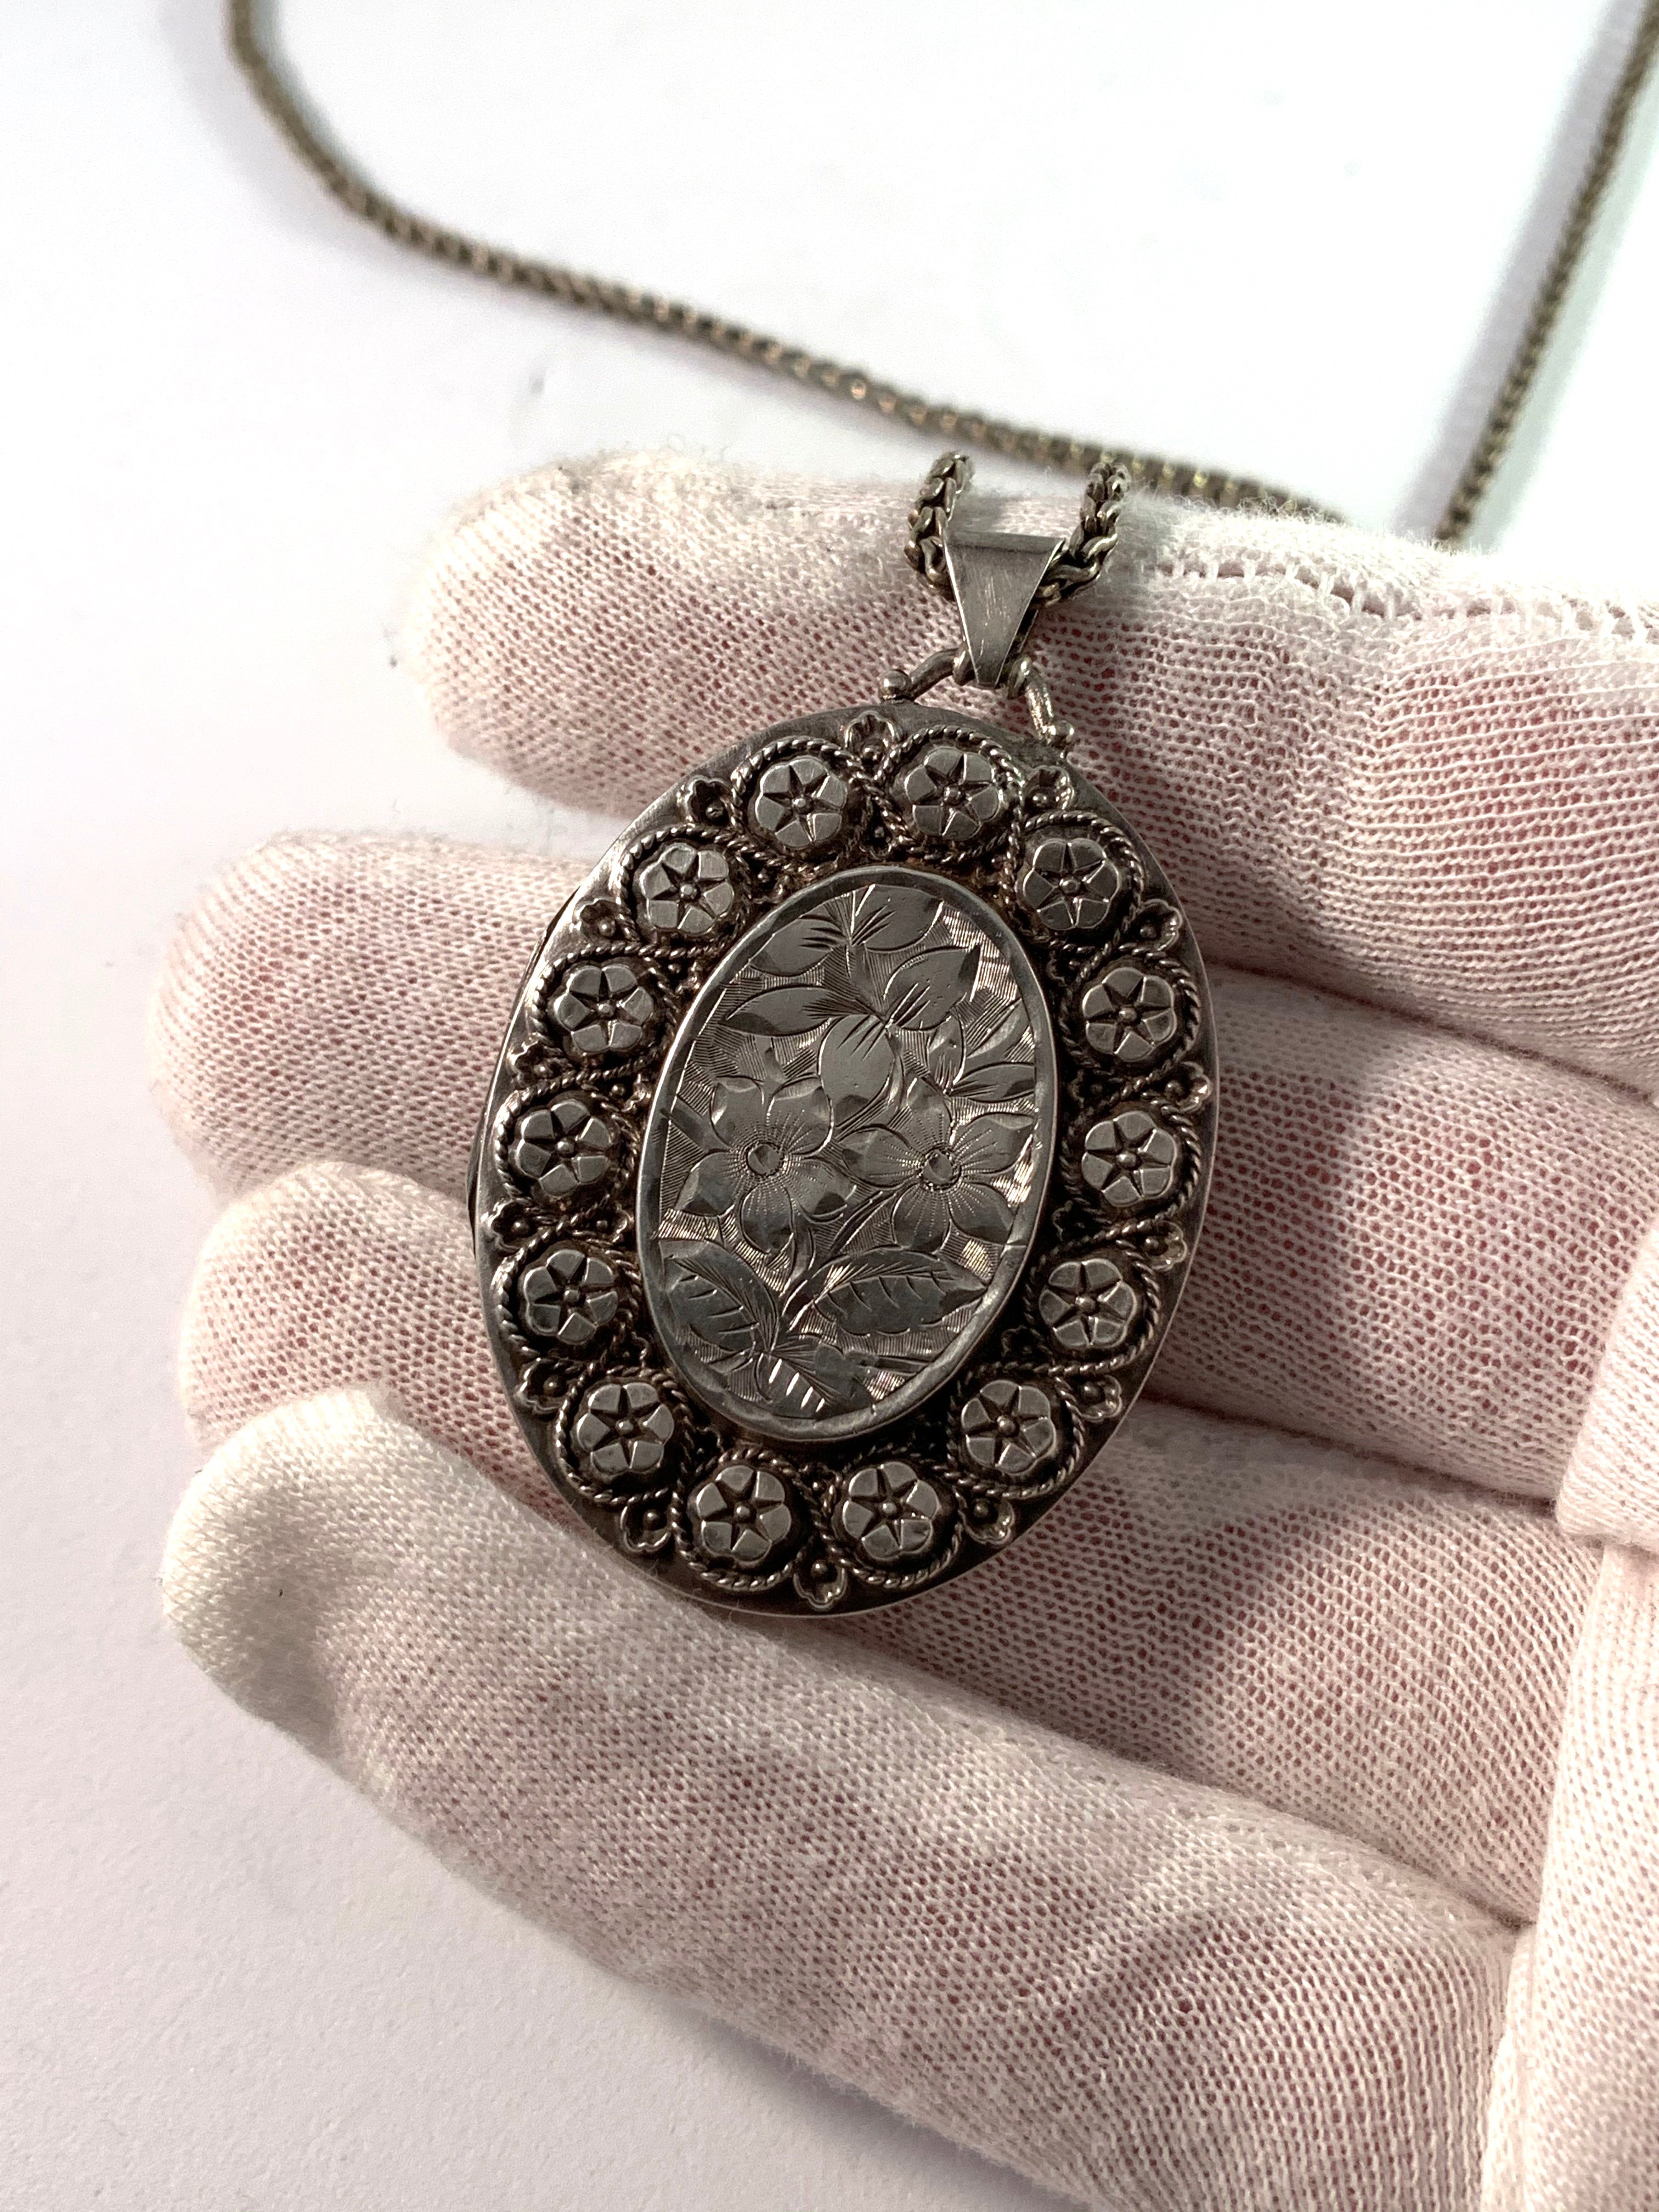 Birmingham year 1885 Victorian Sterling Silver Locket Pendant Necklace.